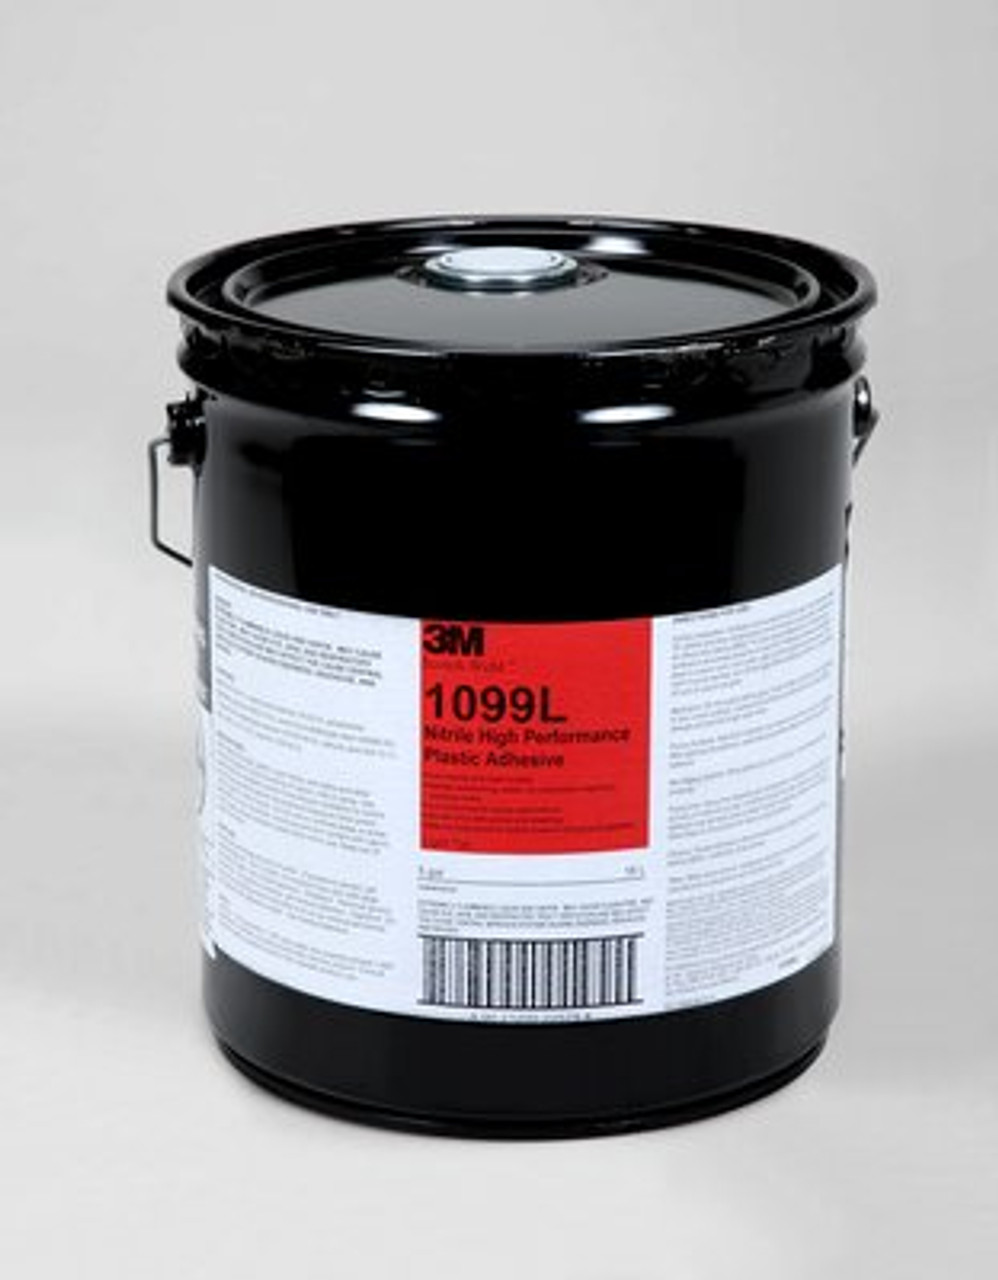 3M™ Nitrile High Performance Plastic Adhesive 1099L, Tan, 5 Gallon Pour Spout Pail